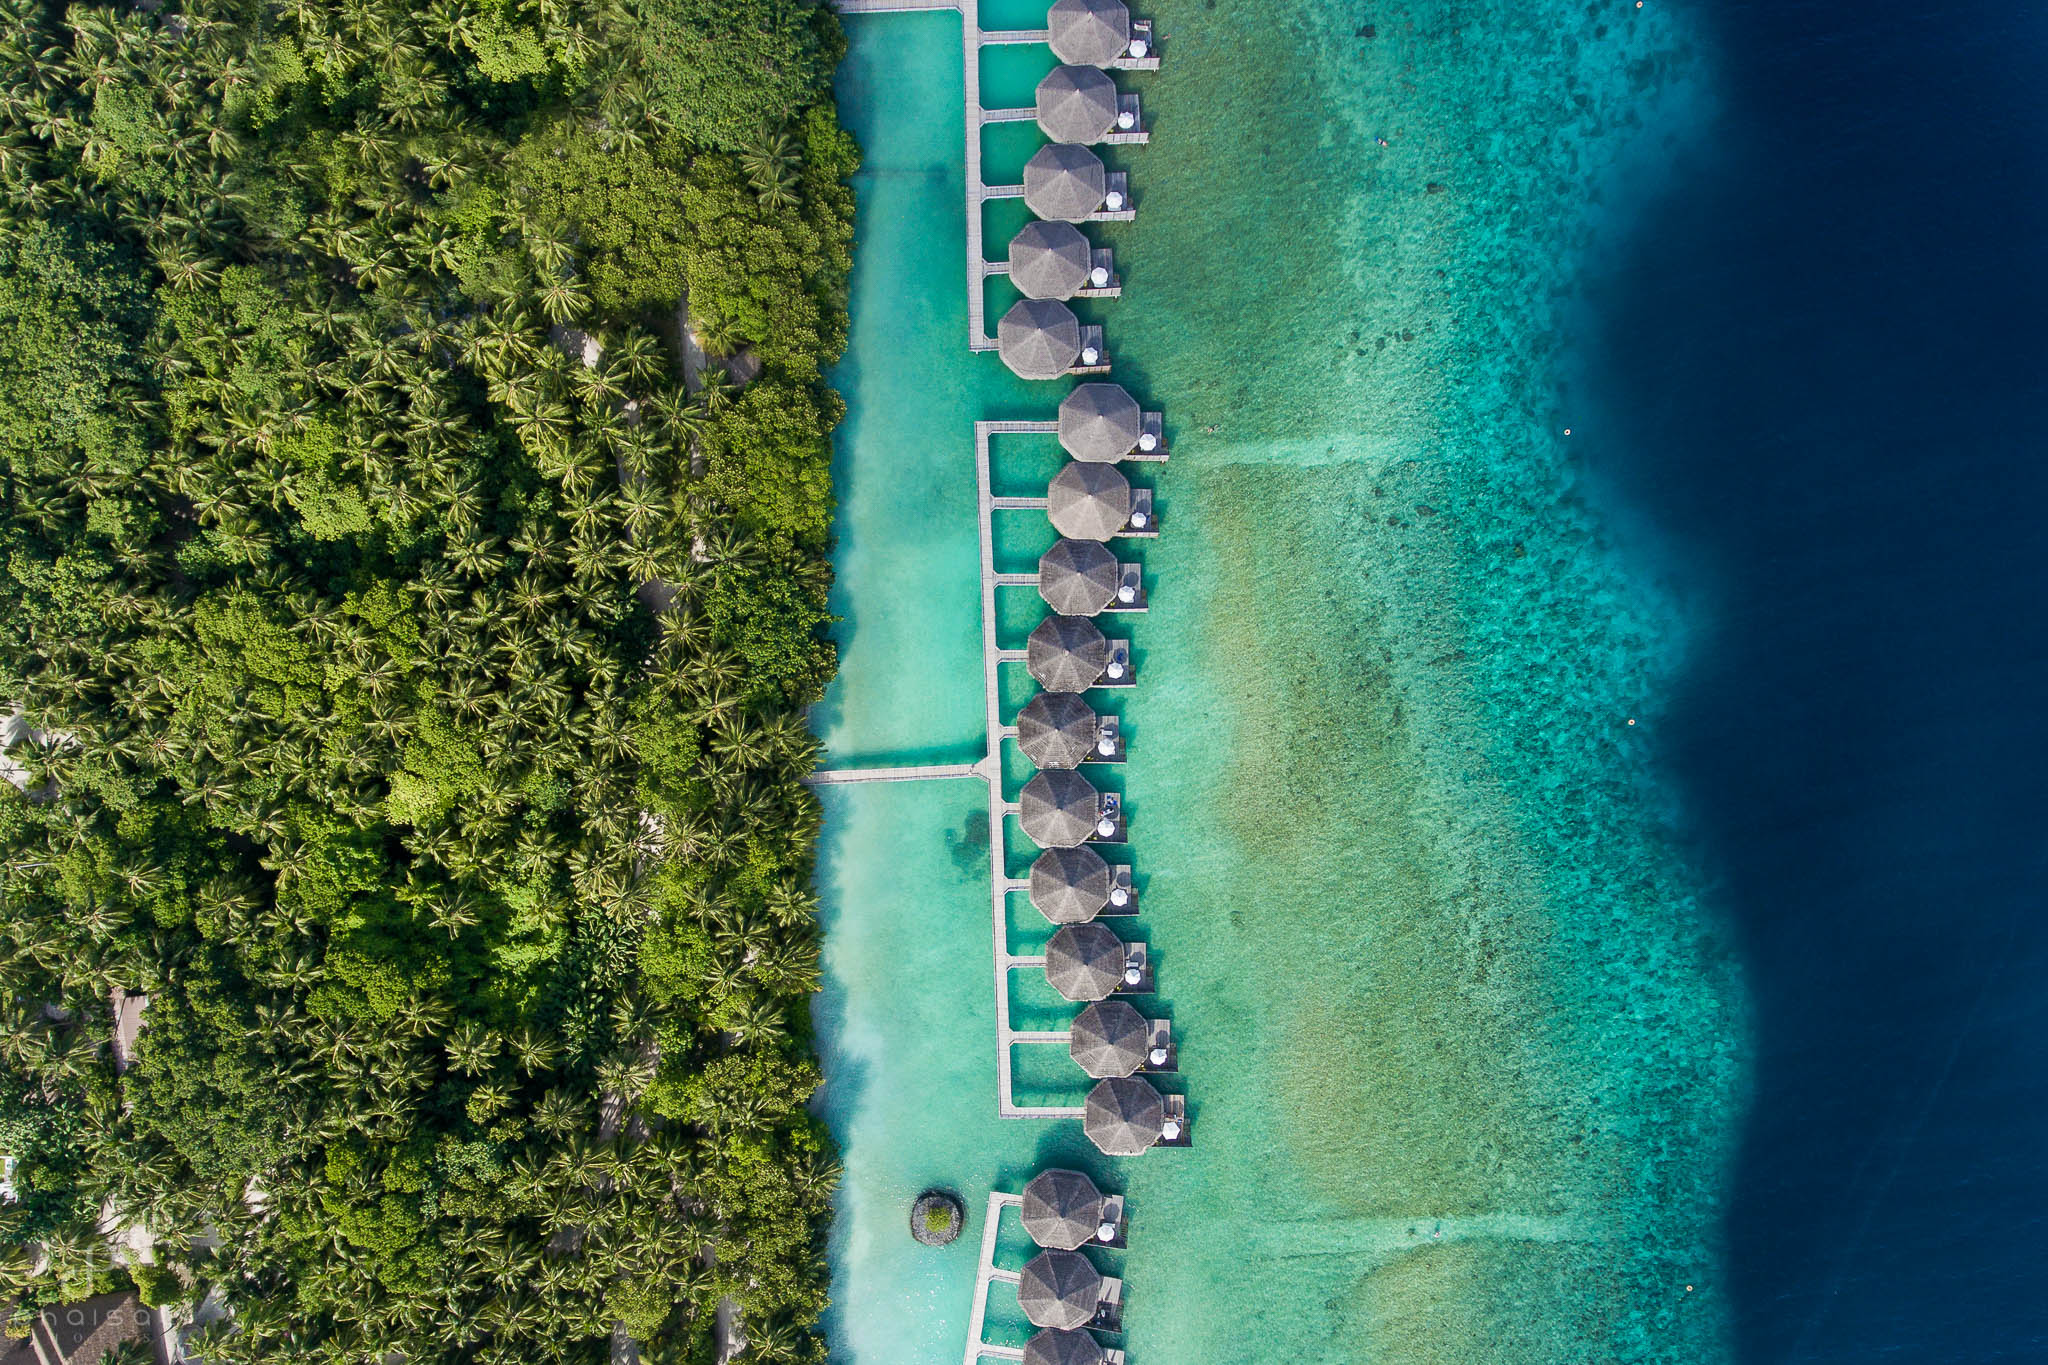 Kuramathi maldives photo by phaisalphotos